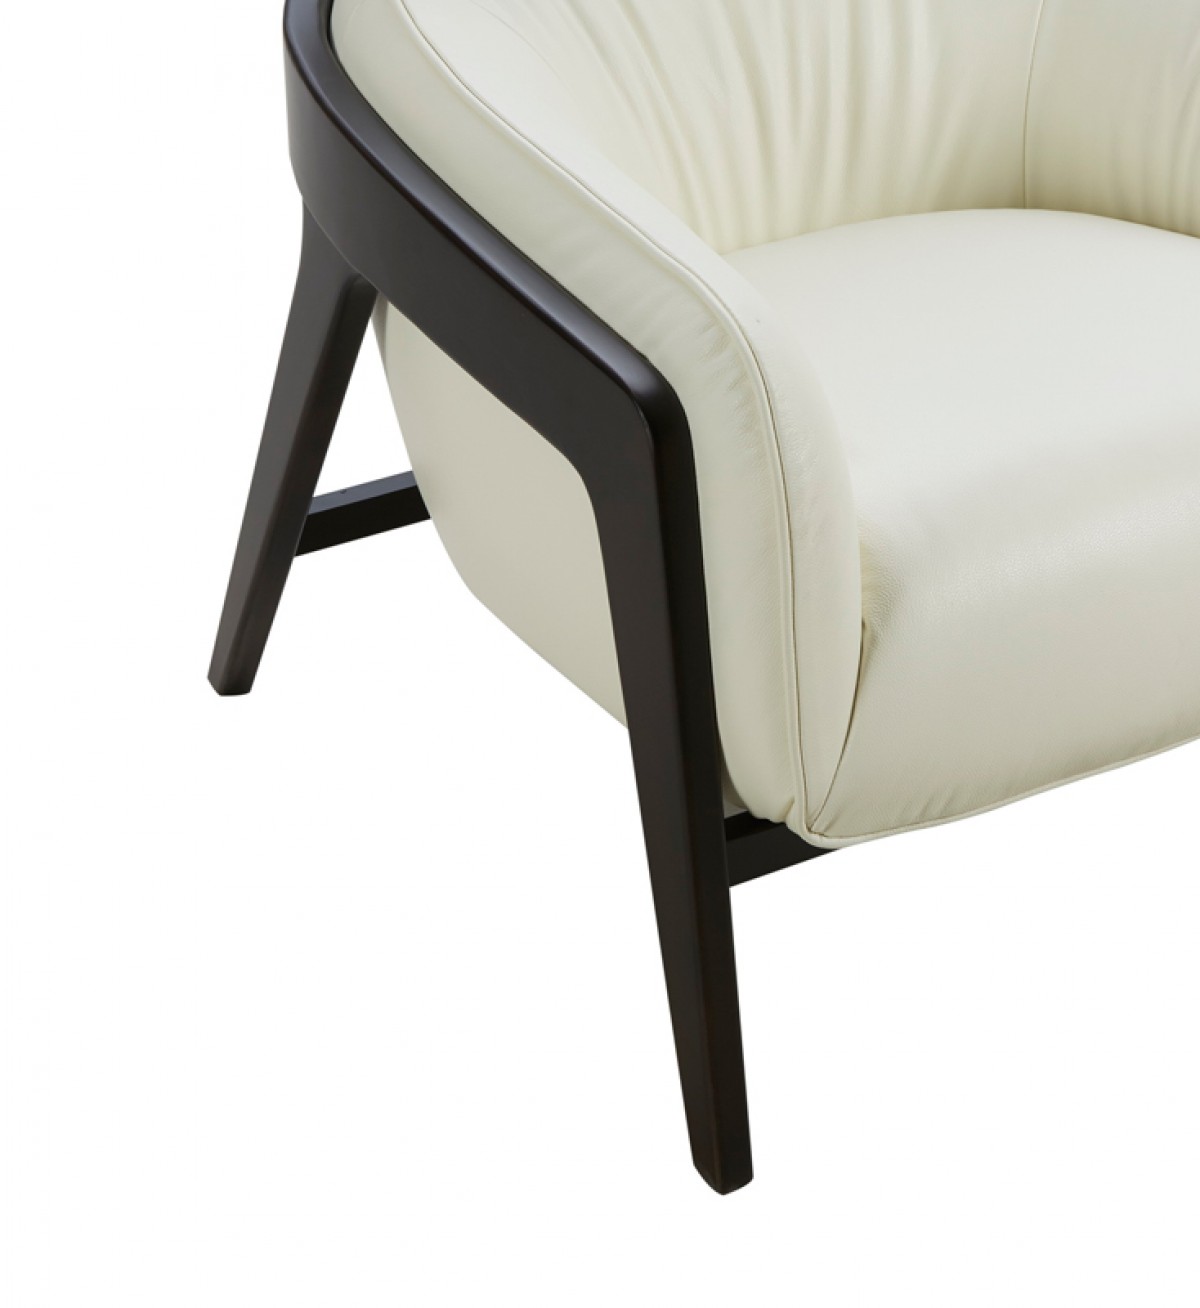 Modern White Leather Accent Chair With Dark Wood Legs Virginia Beach